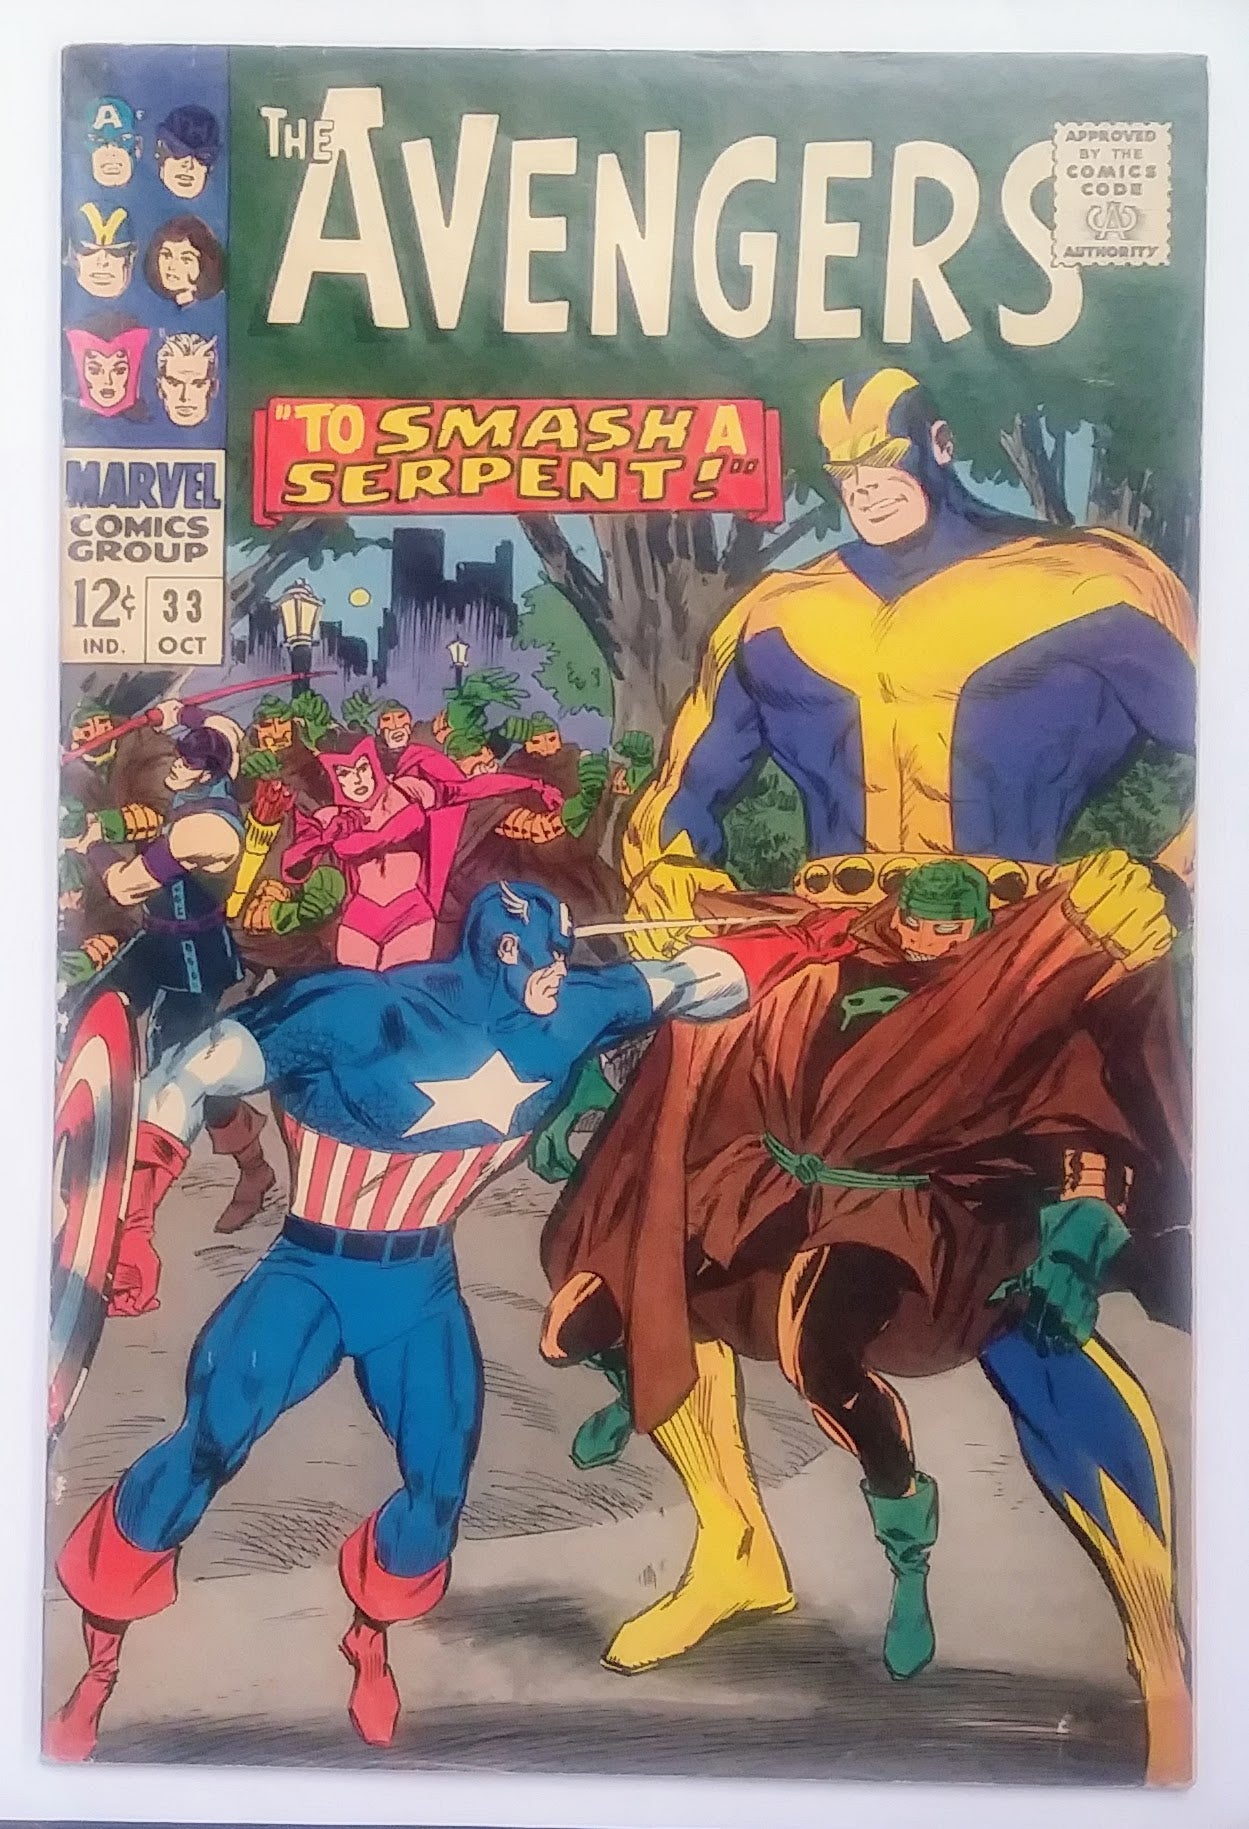 Avengers #033, Marvel Comics (October 1966)